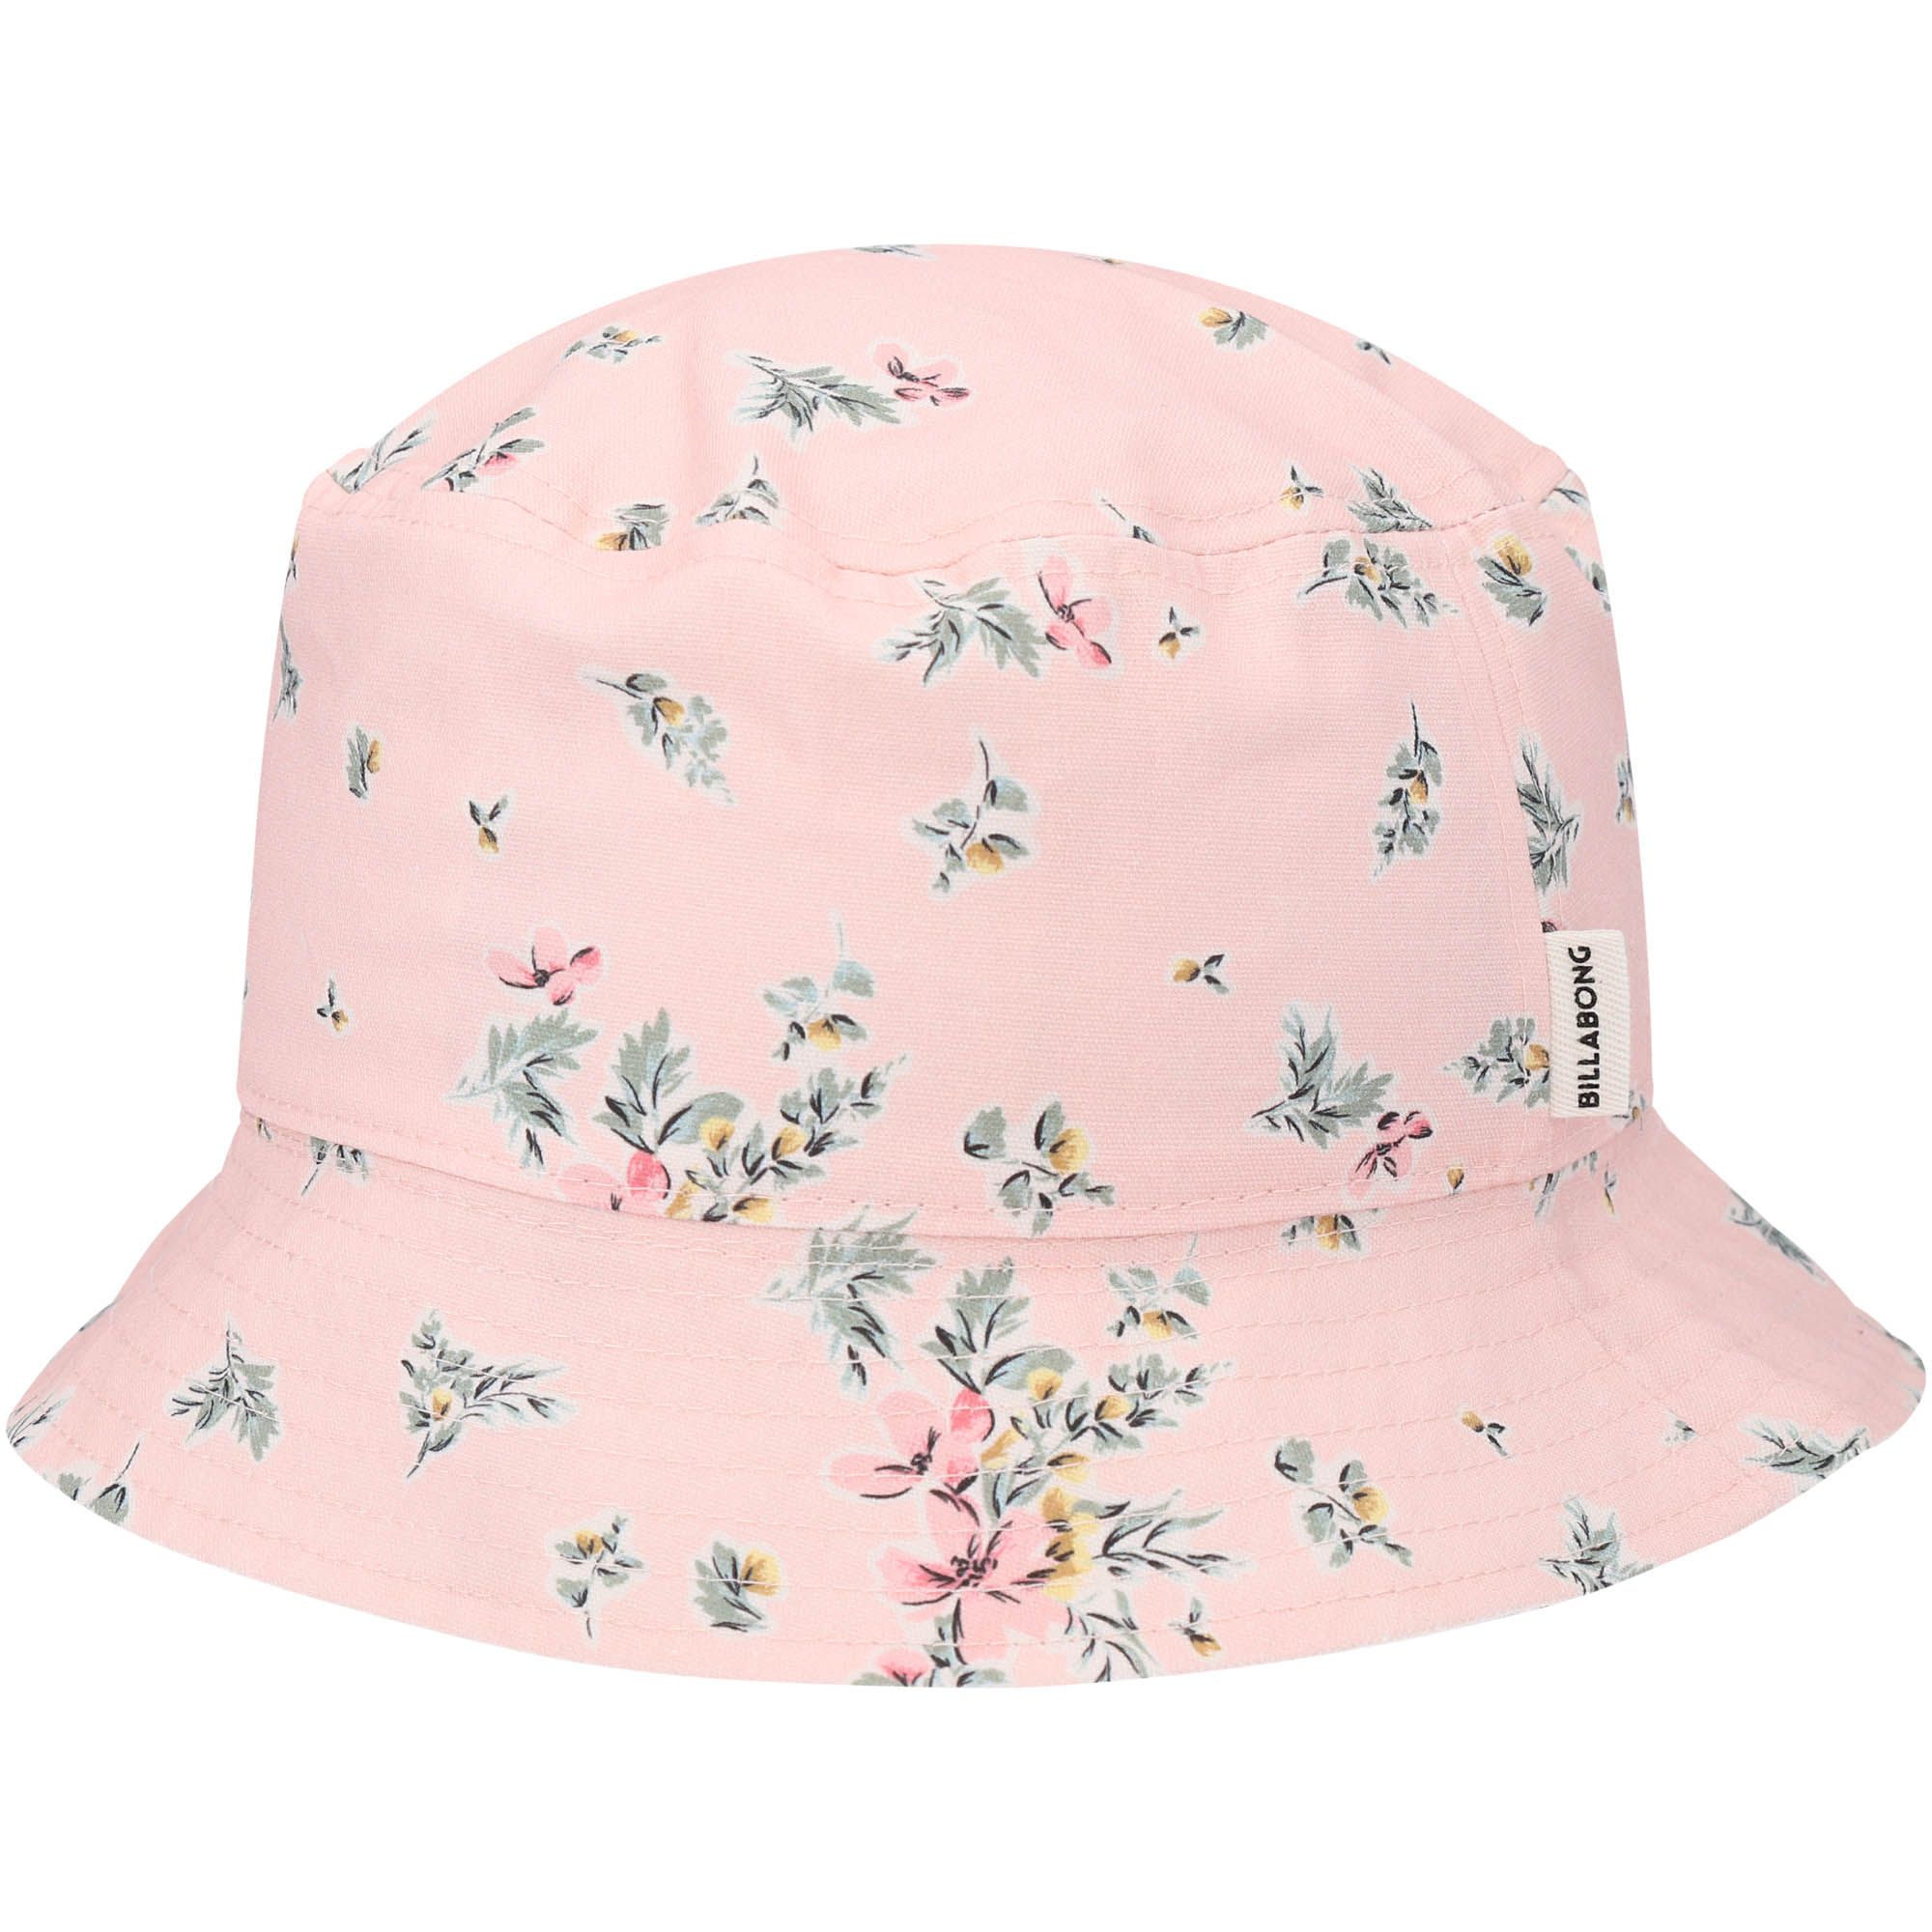 Billabong x The Salty Blonde Women's Party On Reversible Bucket Hat – Pink/White | Fanatics